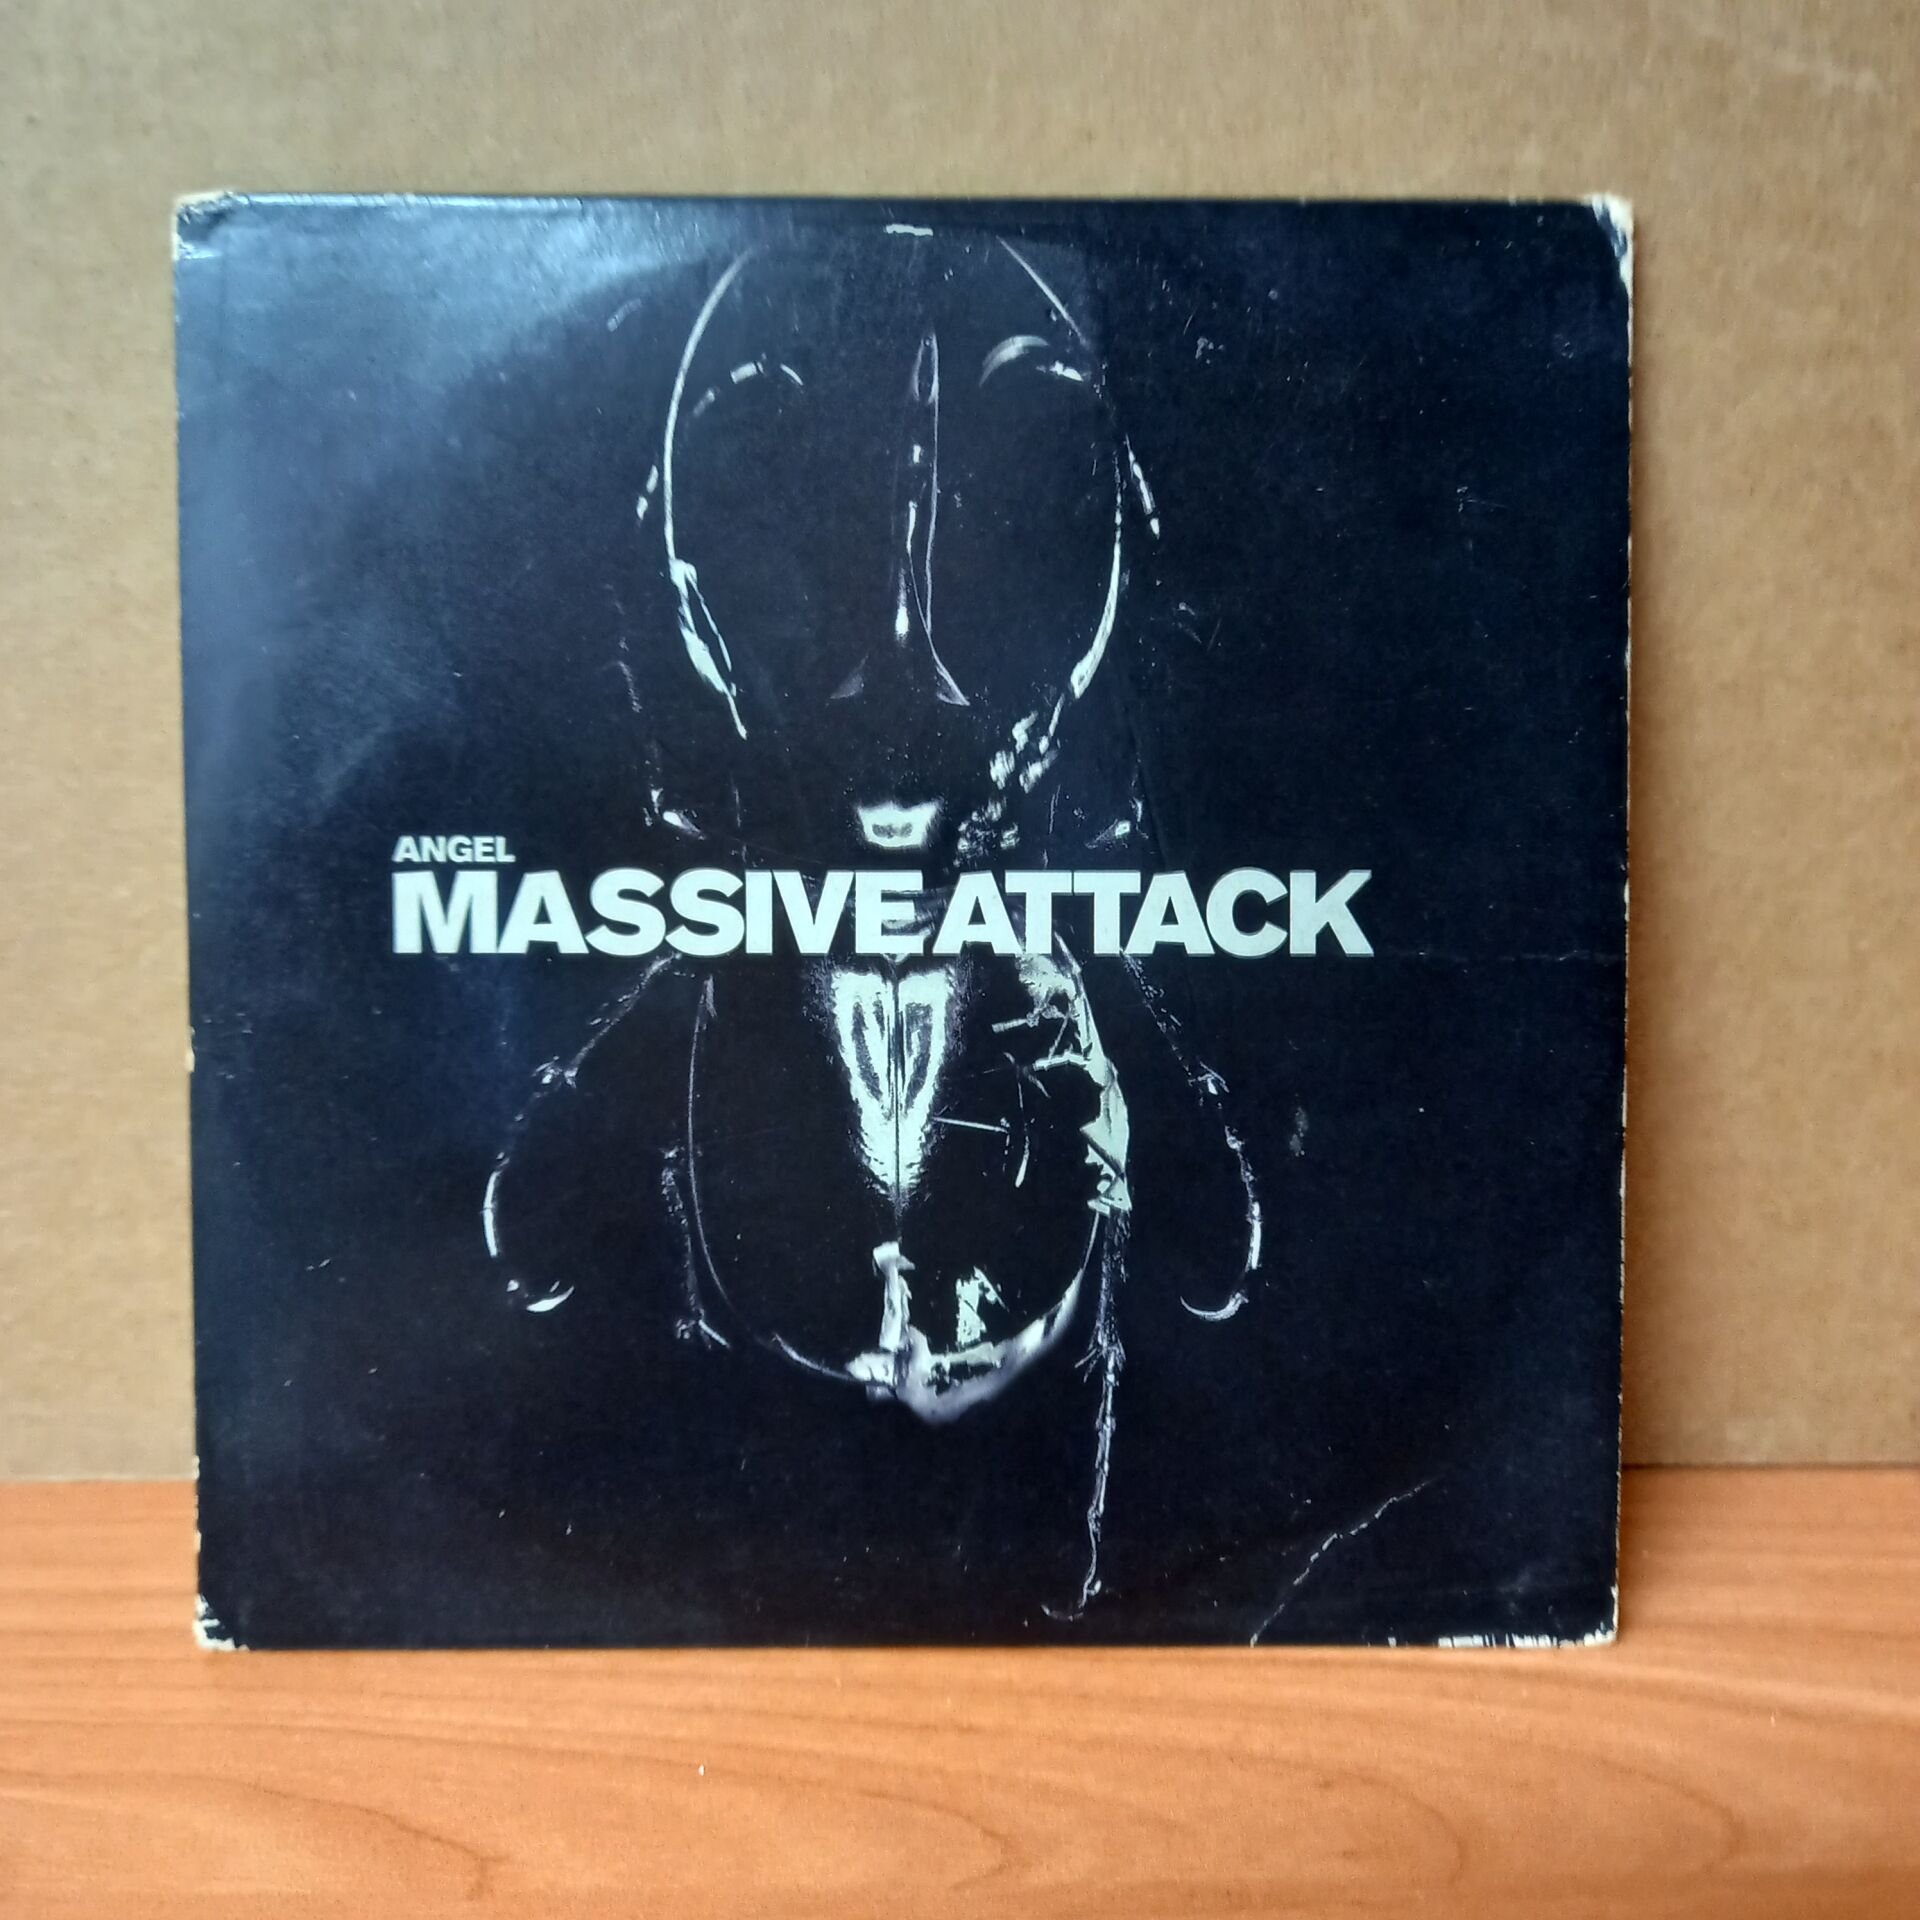 MASSIVE ATTACK - ANGEL (1998) - CD SINGLE 2.EL